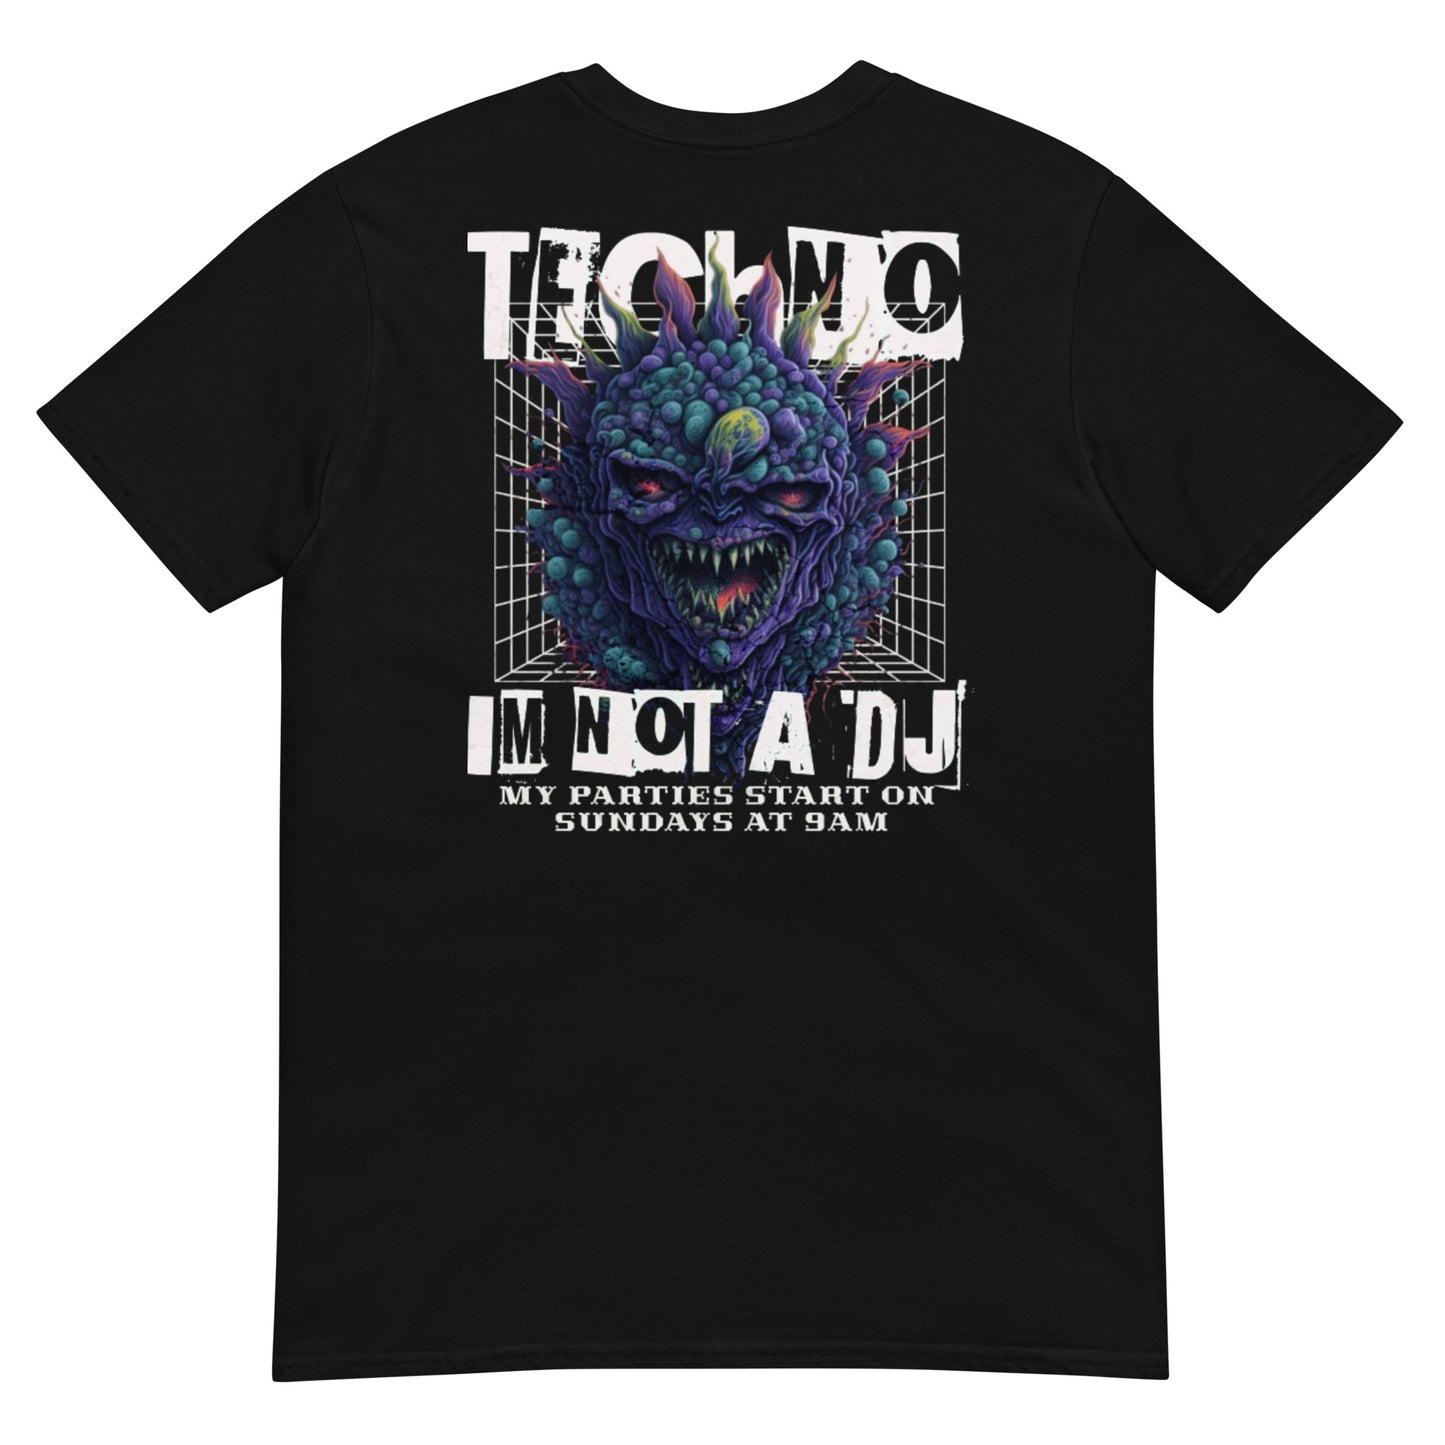 No soy DJ - Camiseta unisex